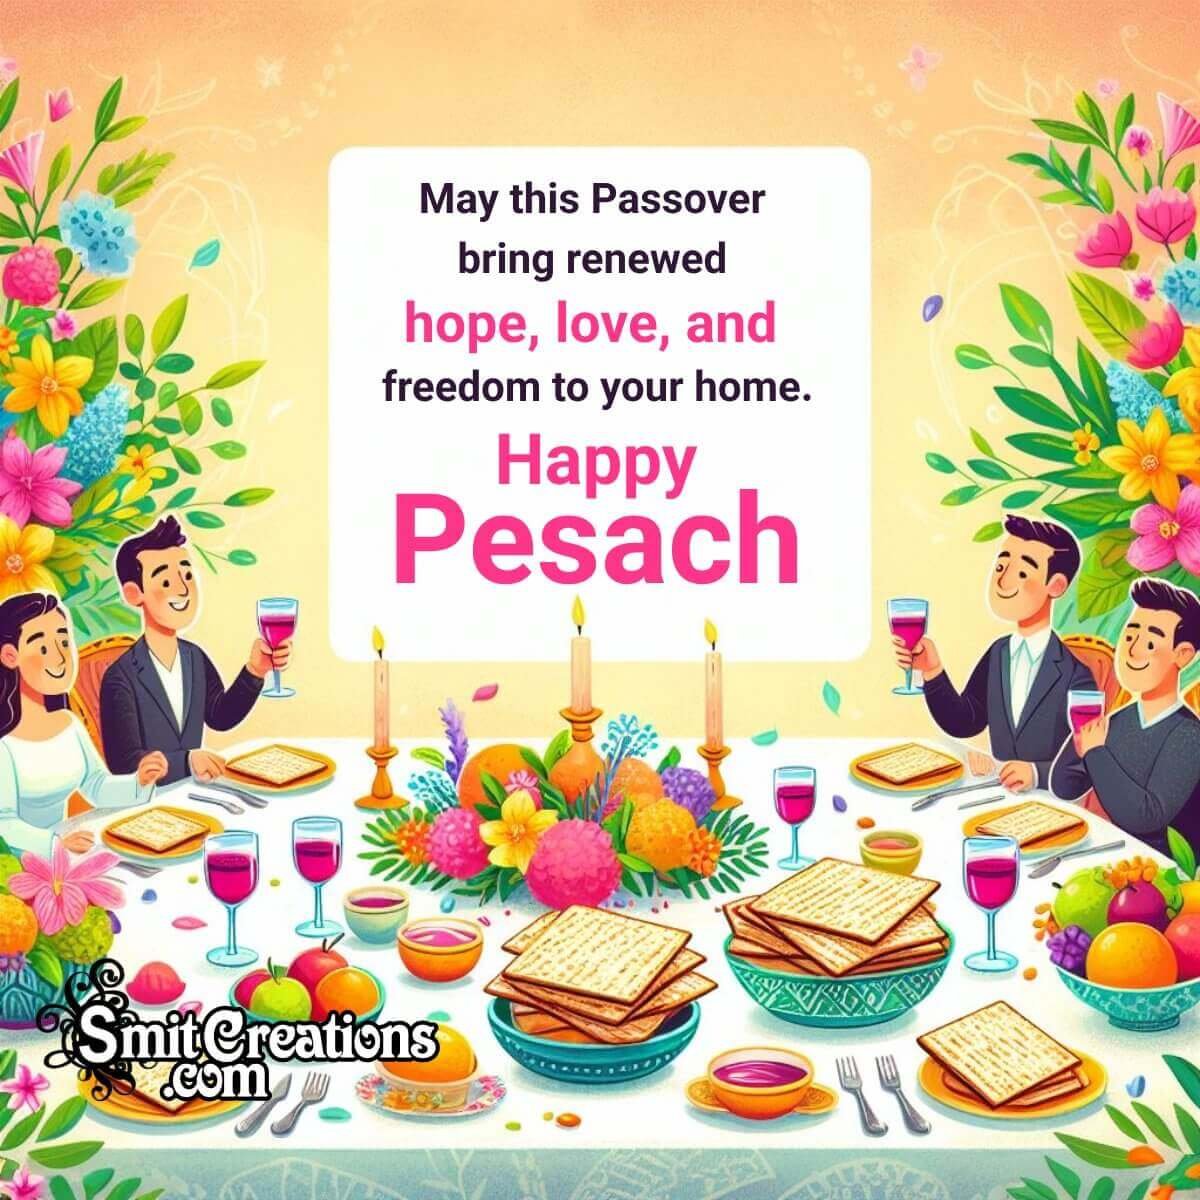 Wonderful Passover Day Message Photo